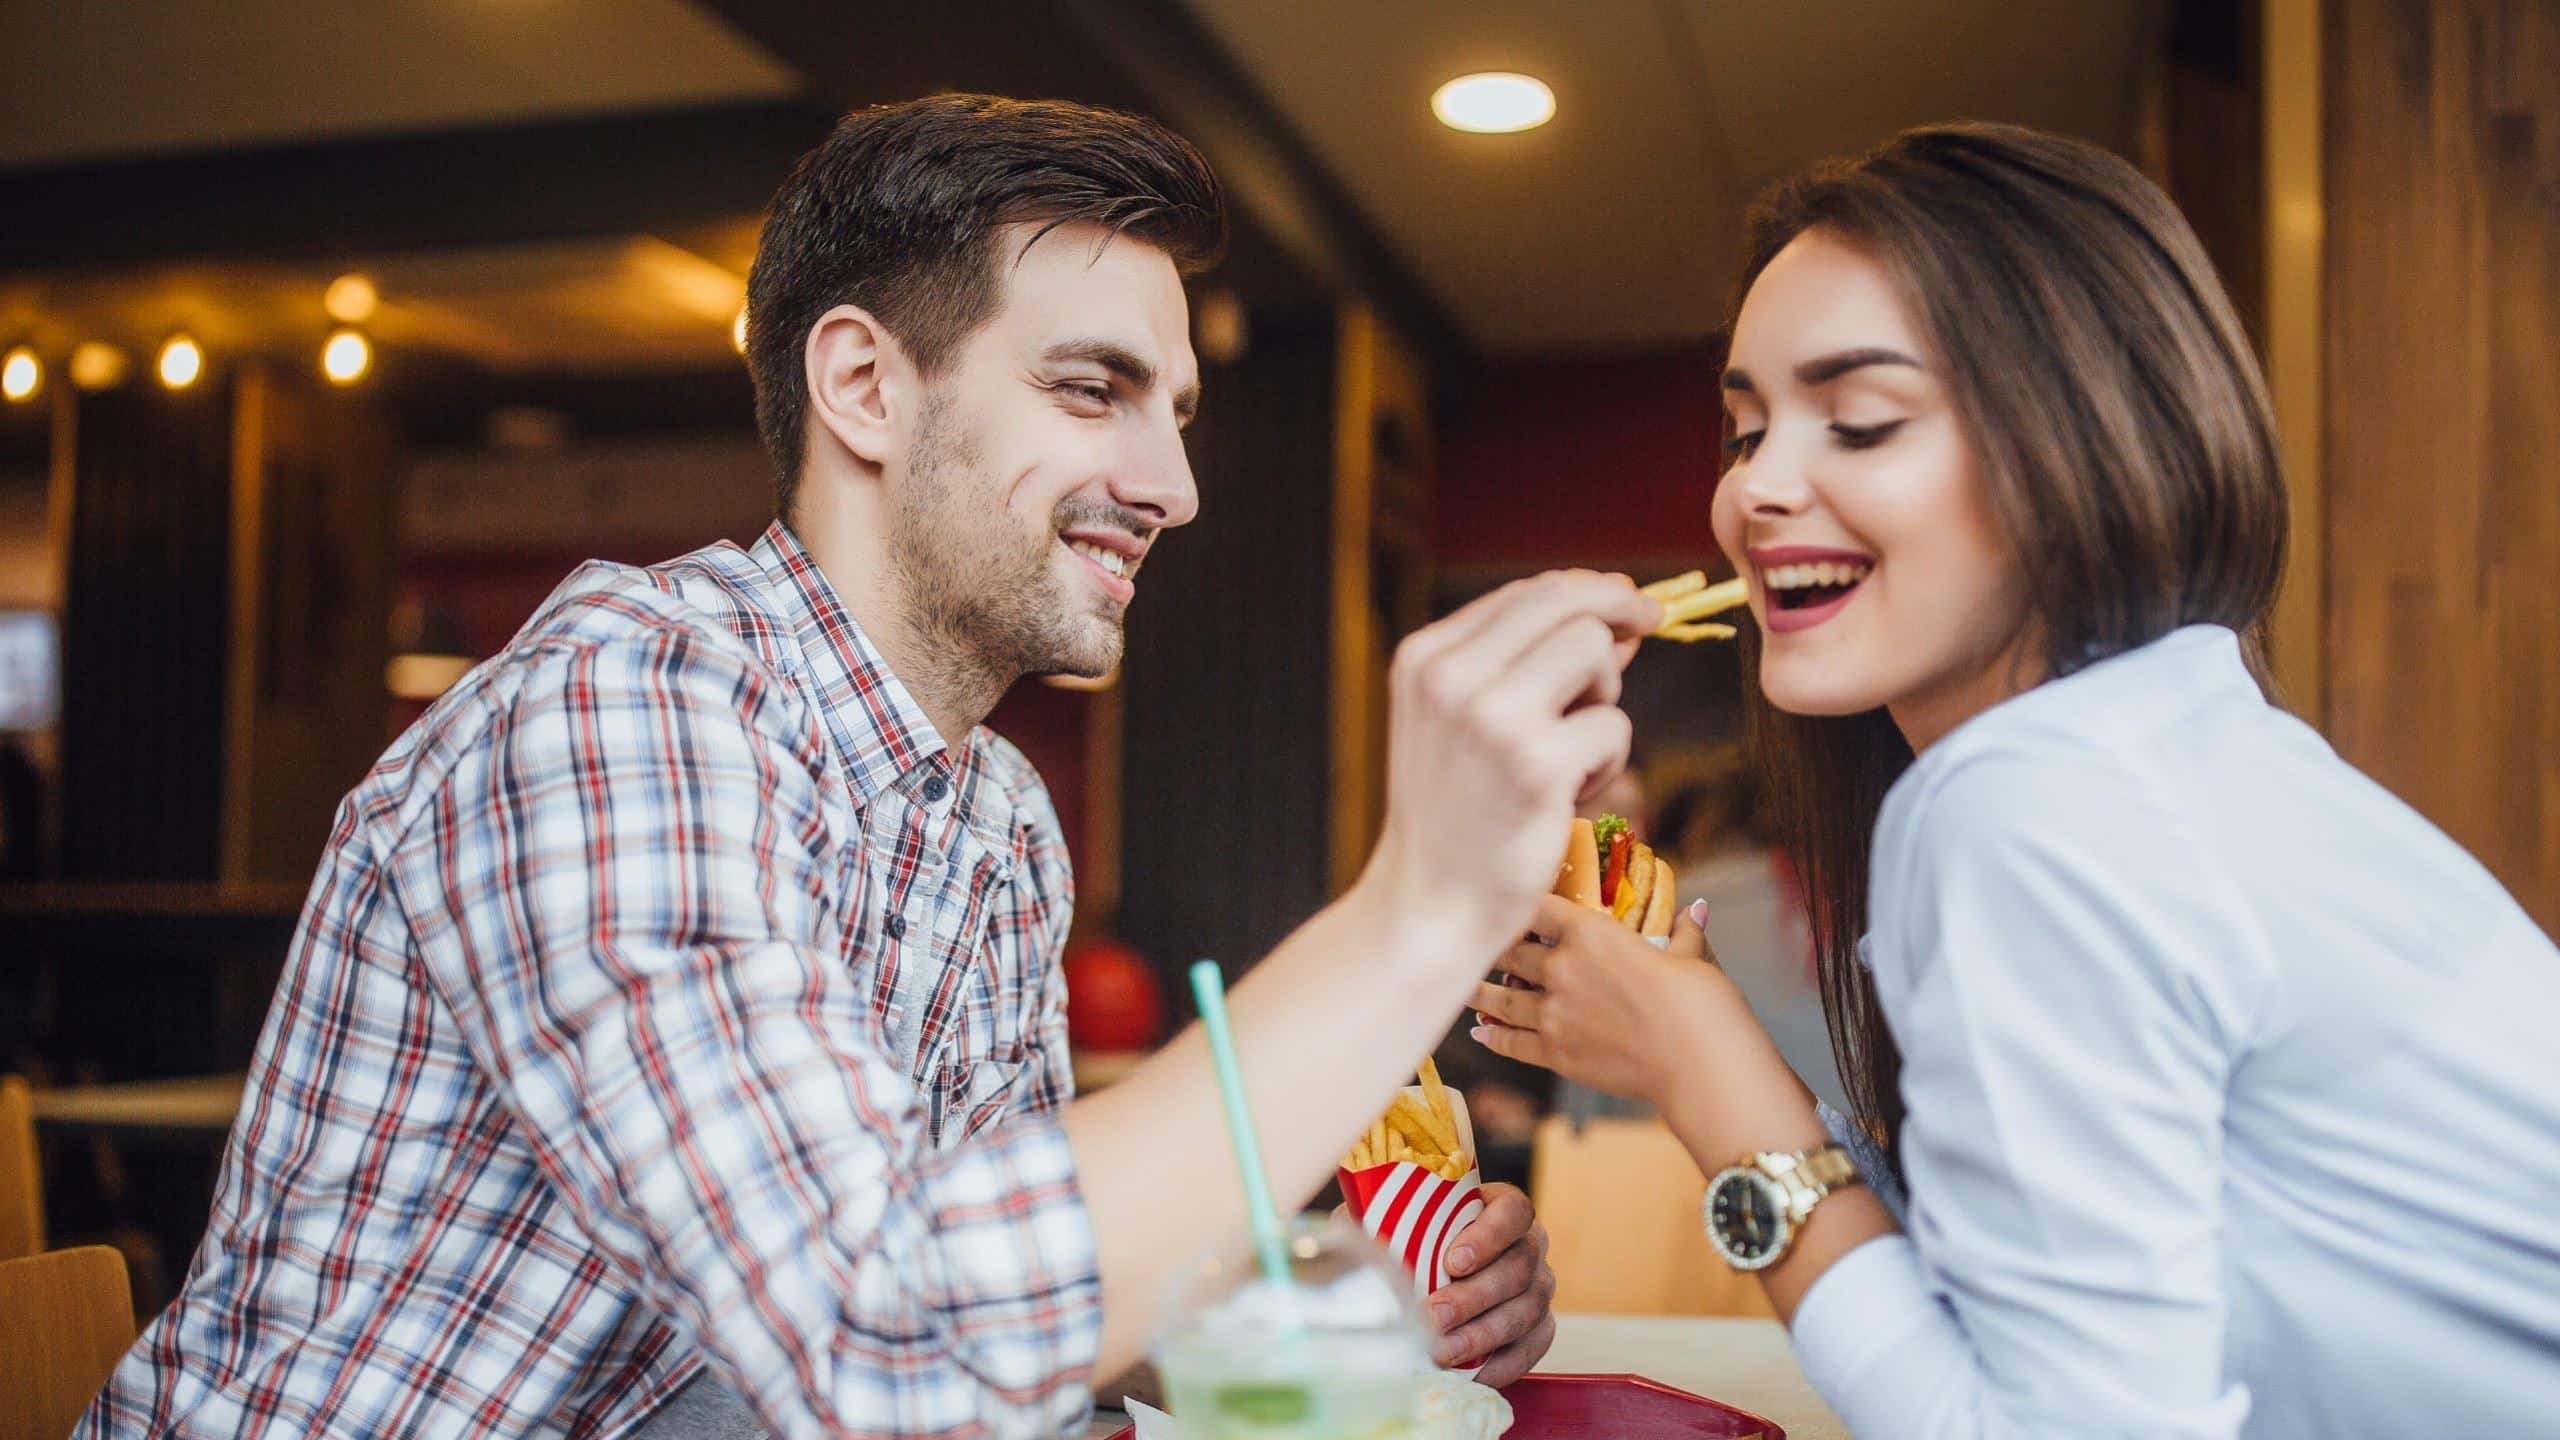 A man feeding fries to his girlfriend at a restaurant.